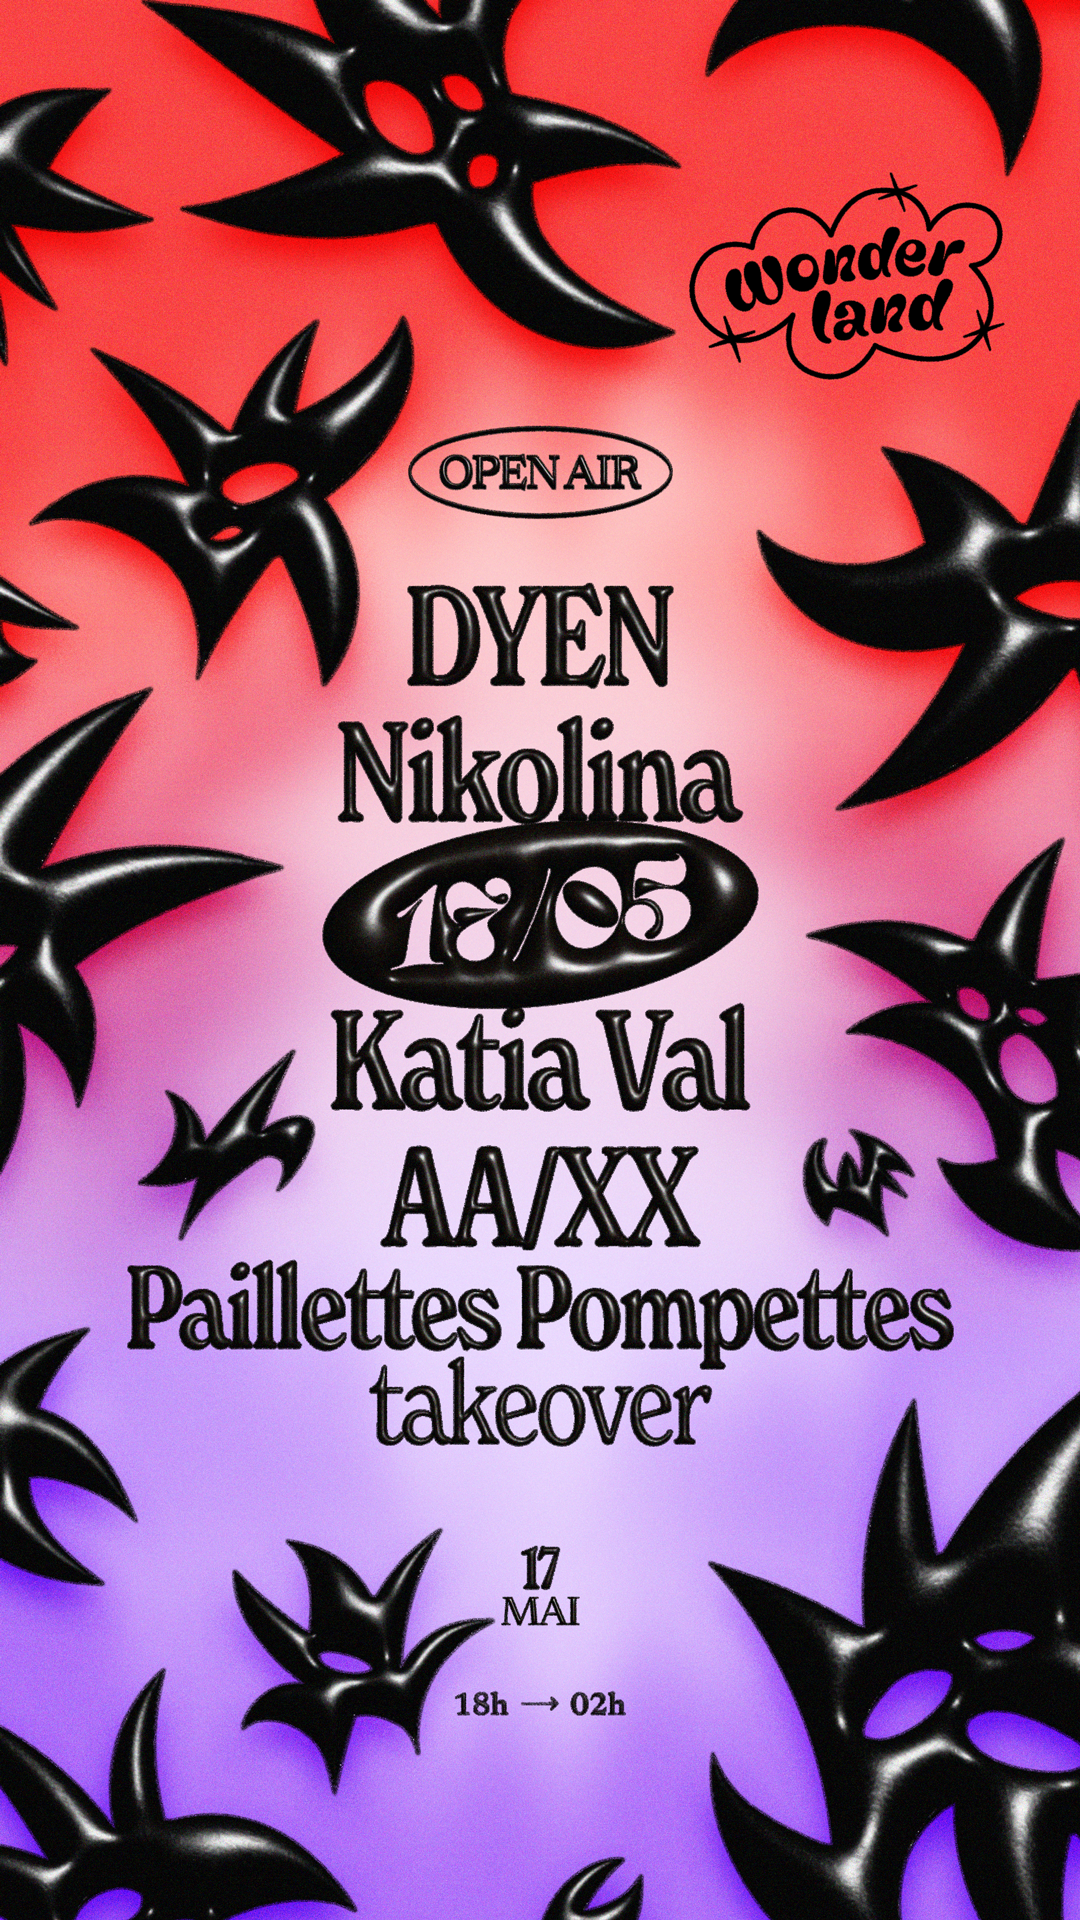 [Cancelled] Wonderland invite: DYEN - Nikolina - Katia Val - AA/XX - Paillettes Pompettes - フライヤー裏